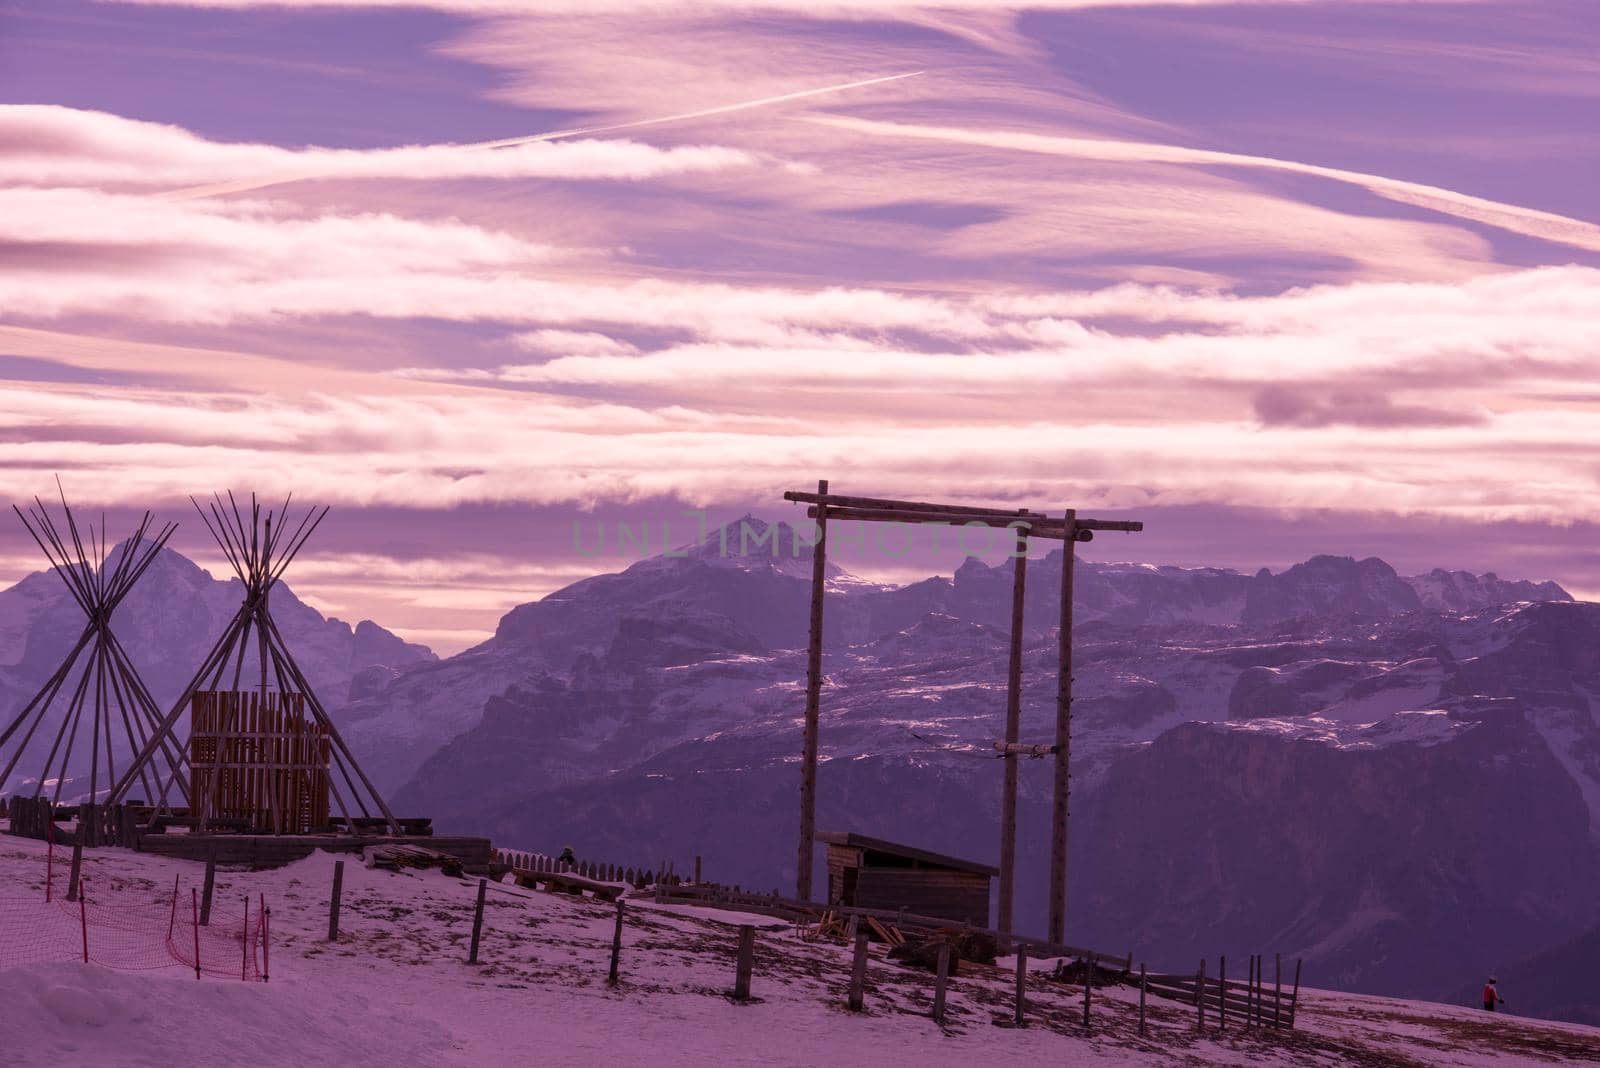 winter mountains beautiful alpine panoramic view snow capped European alps